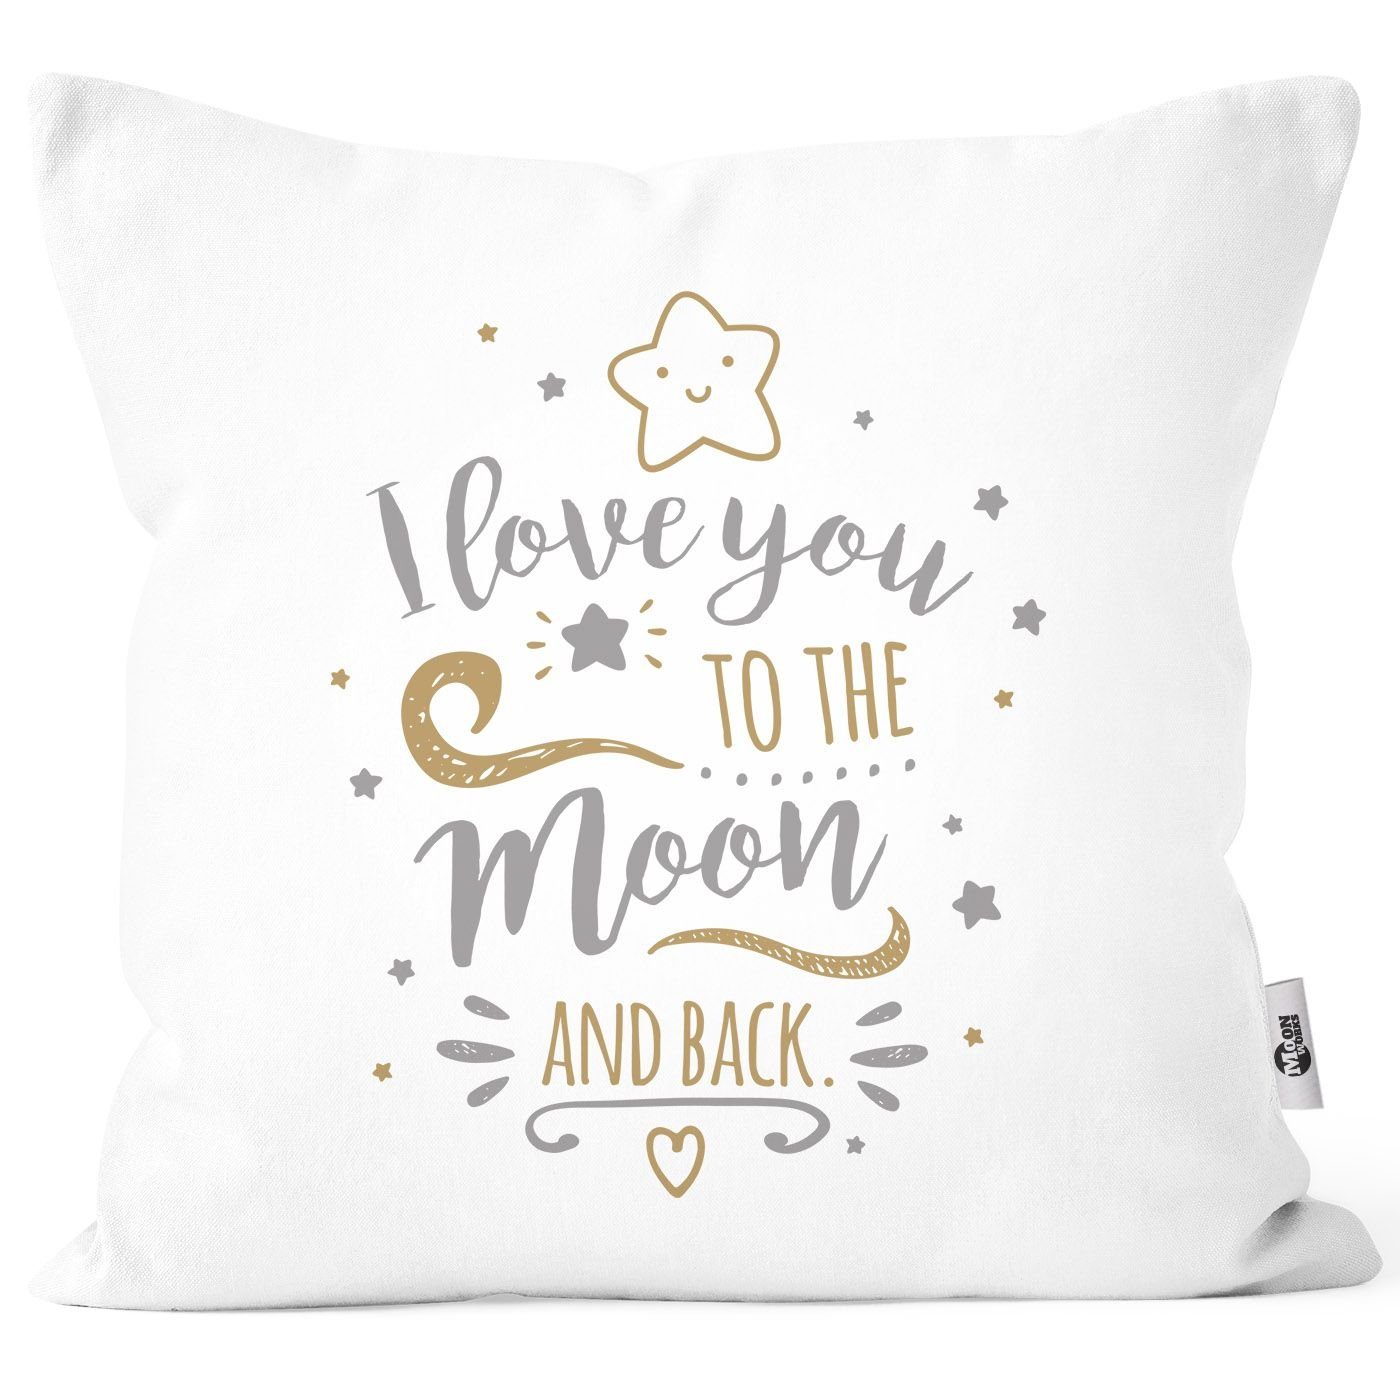 MoonWorks Dekokissen Kissenbezug I love you and Liebeserklärung back Moonworks® to the moon Liebesgeschenke